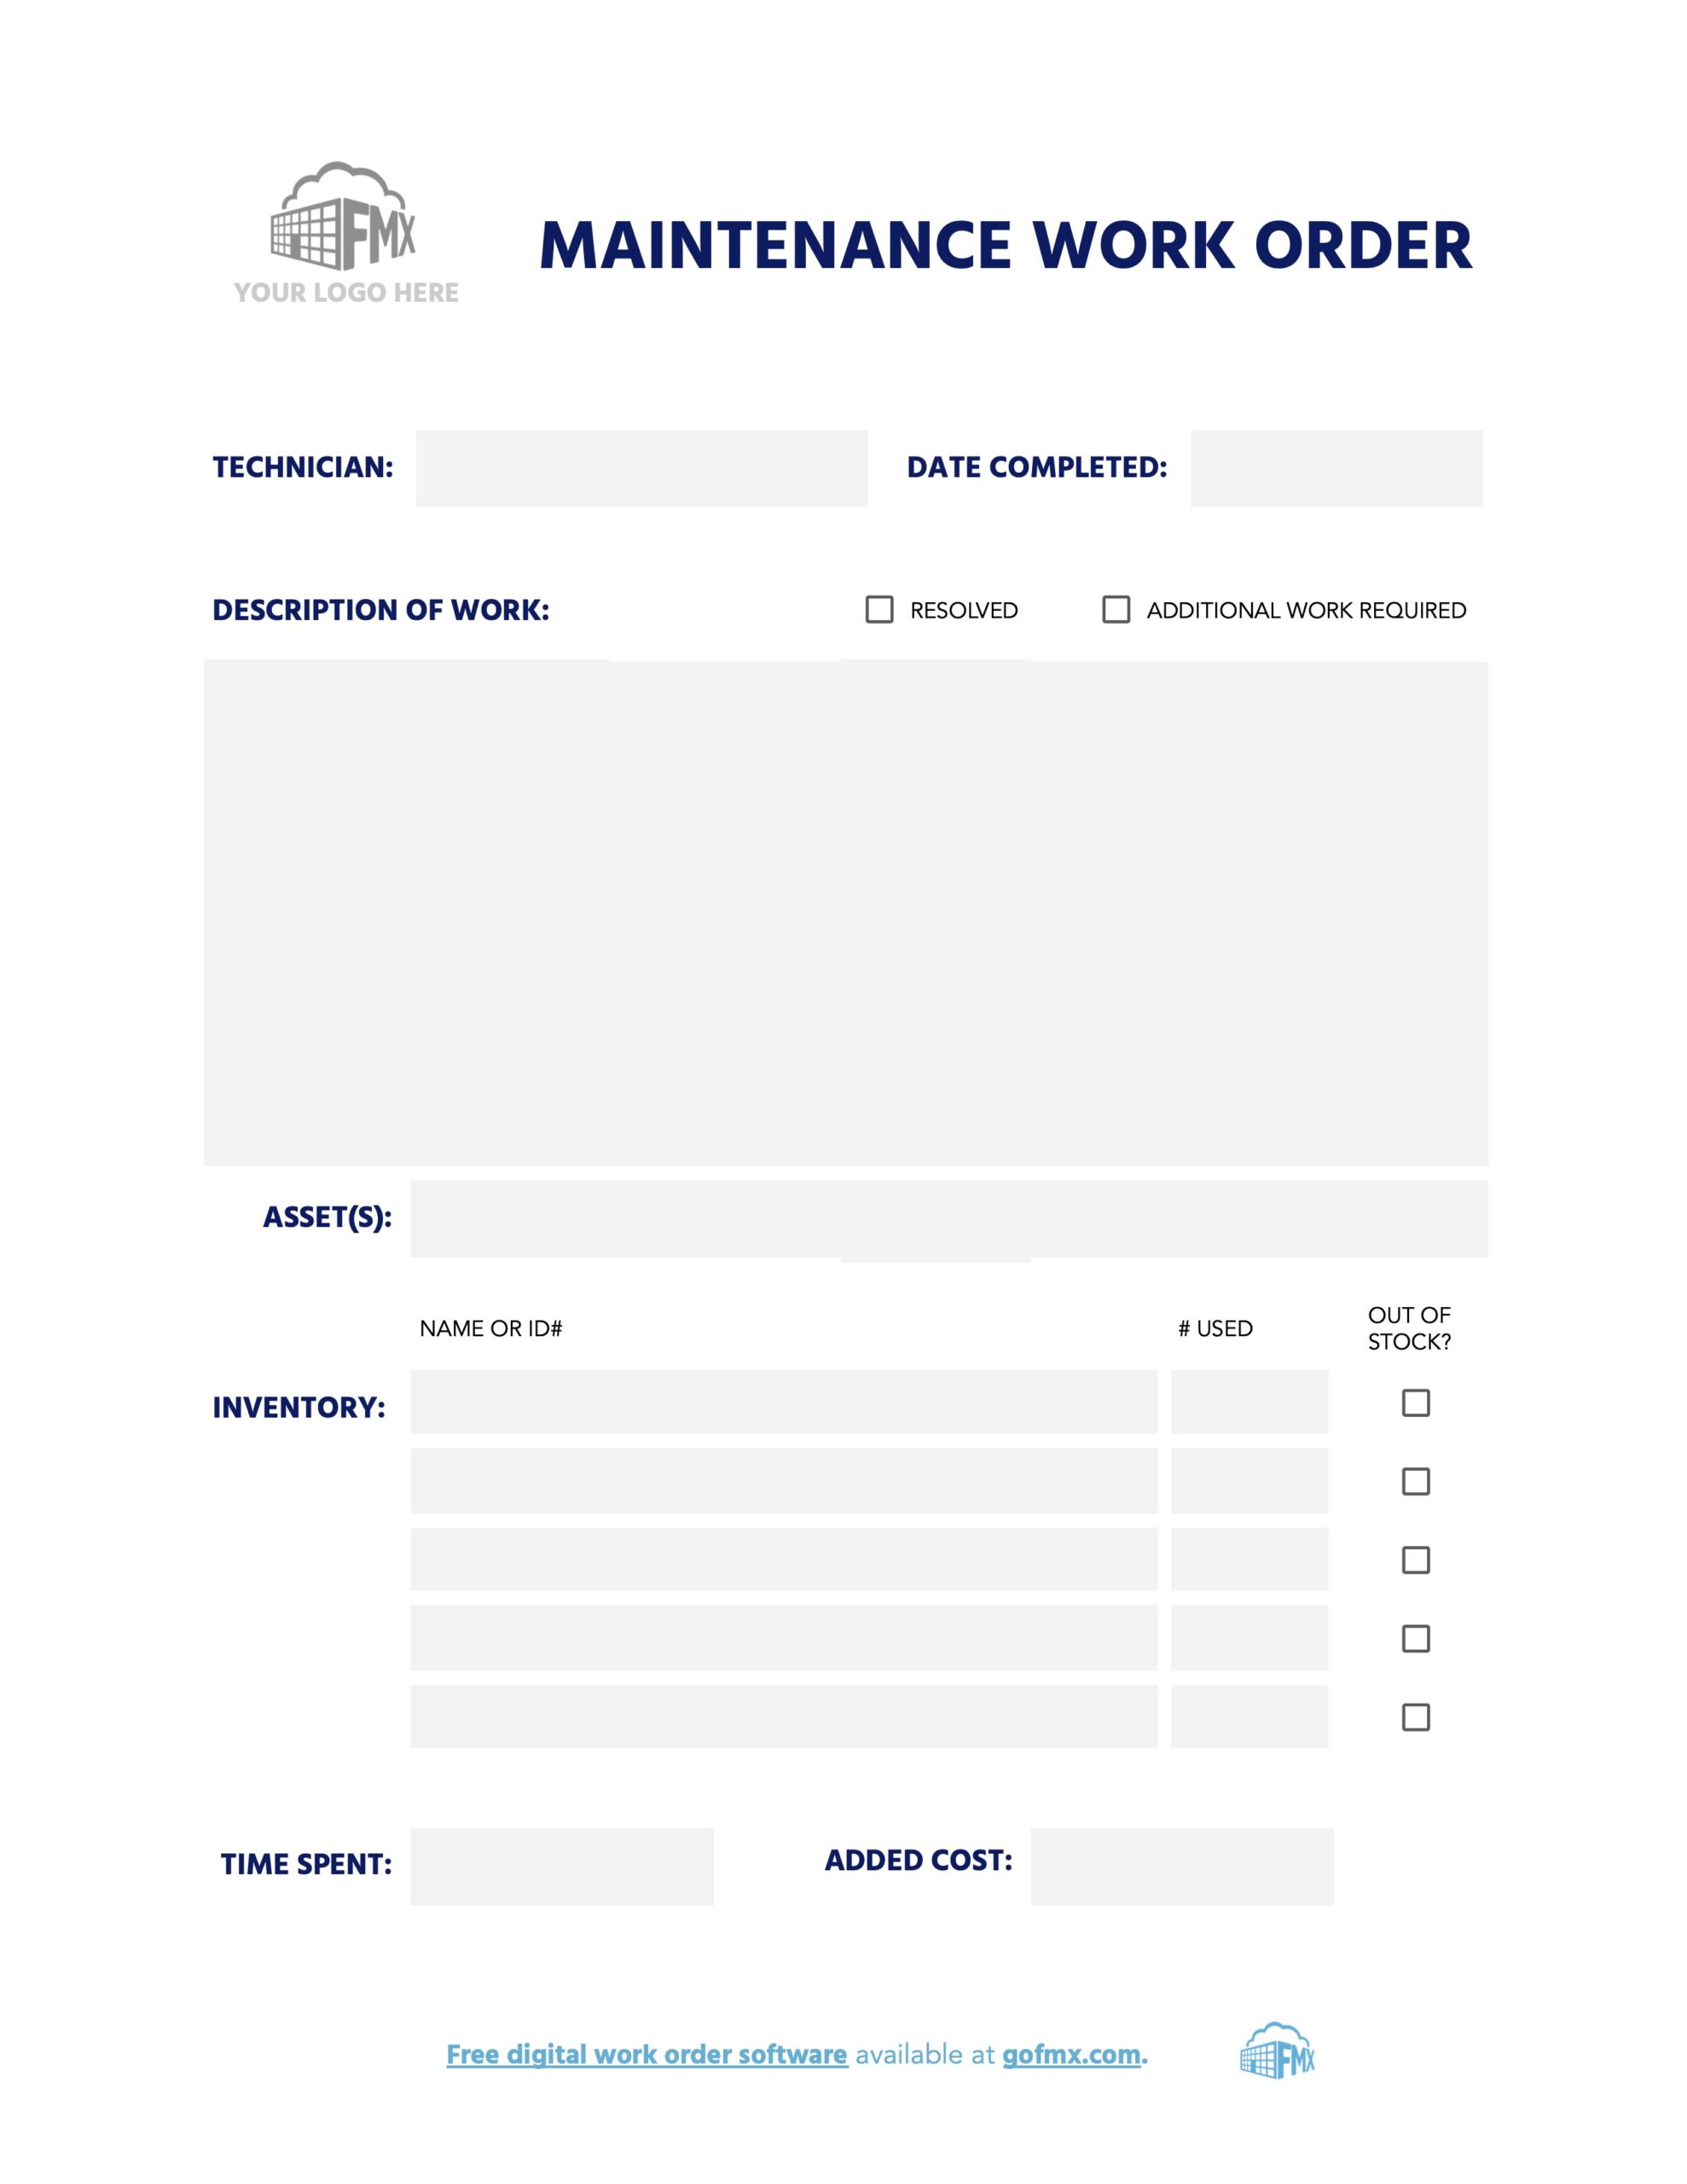 work order software free download